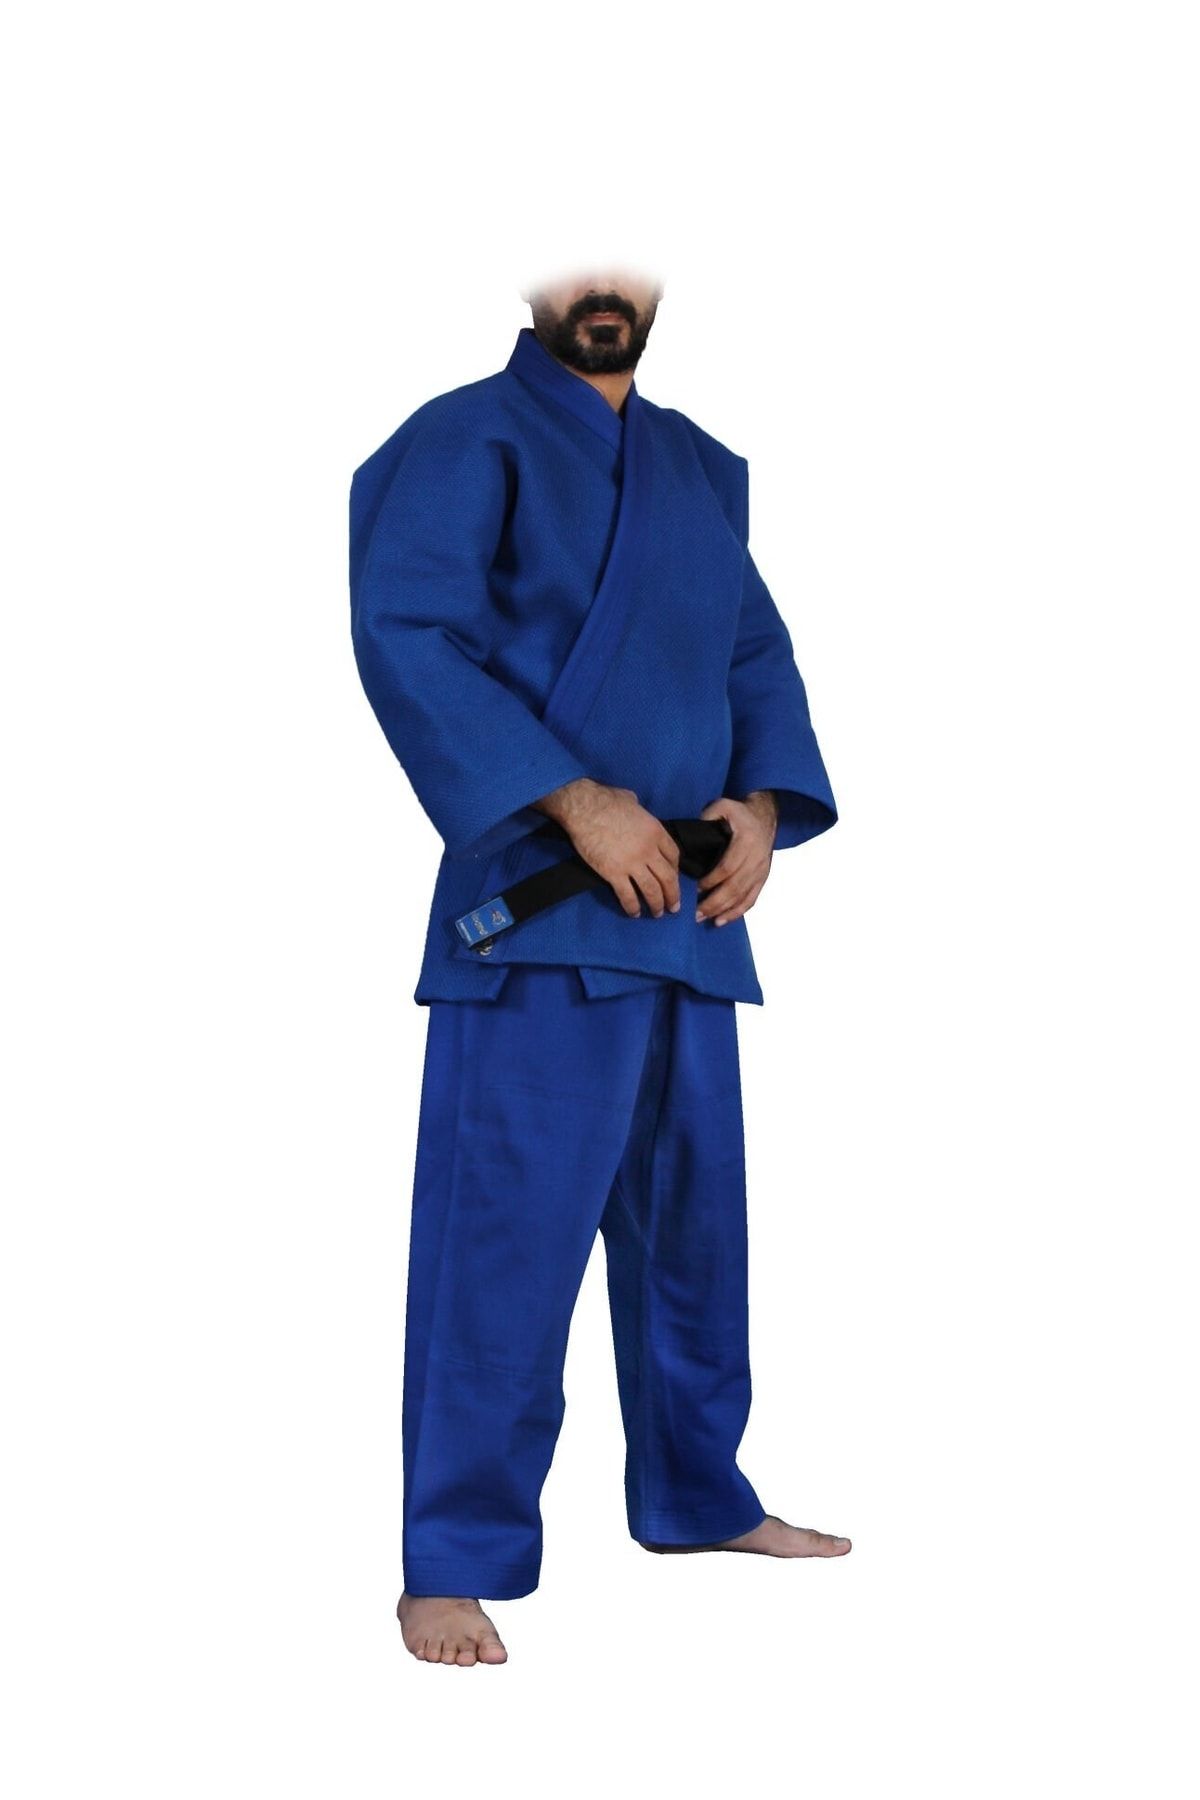 DO-SMAI Profesyonel Judo Aikido Elbisesi ( Kuşaksız ) Ja061